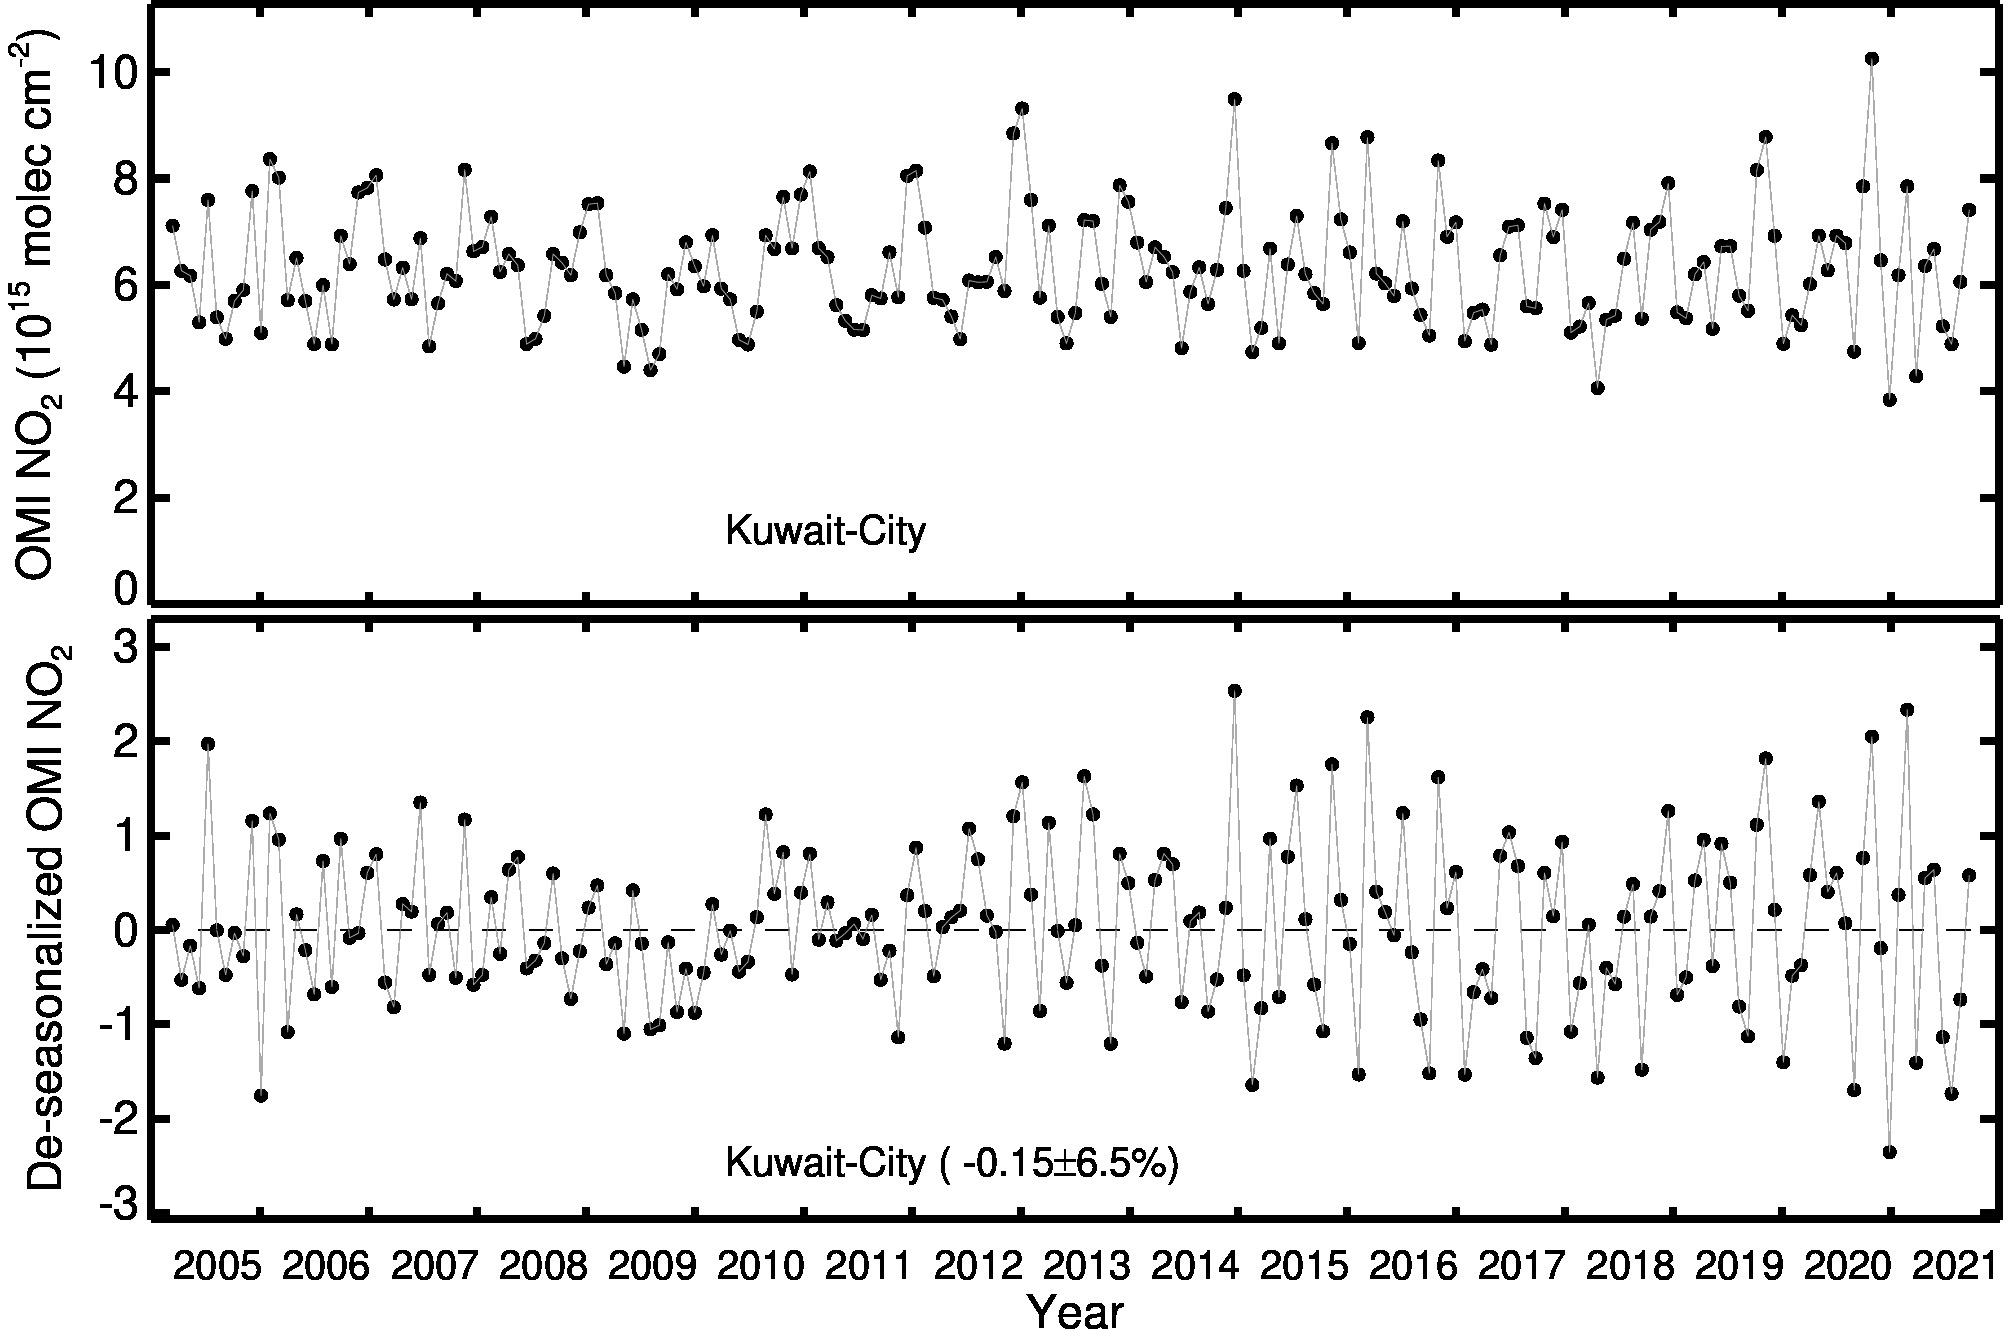 Kuwait City Line Plot 2005-2021